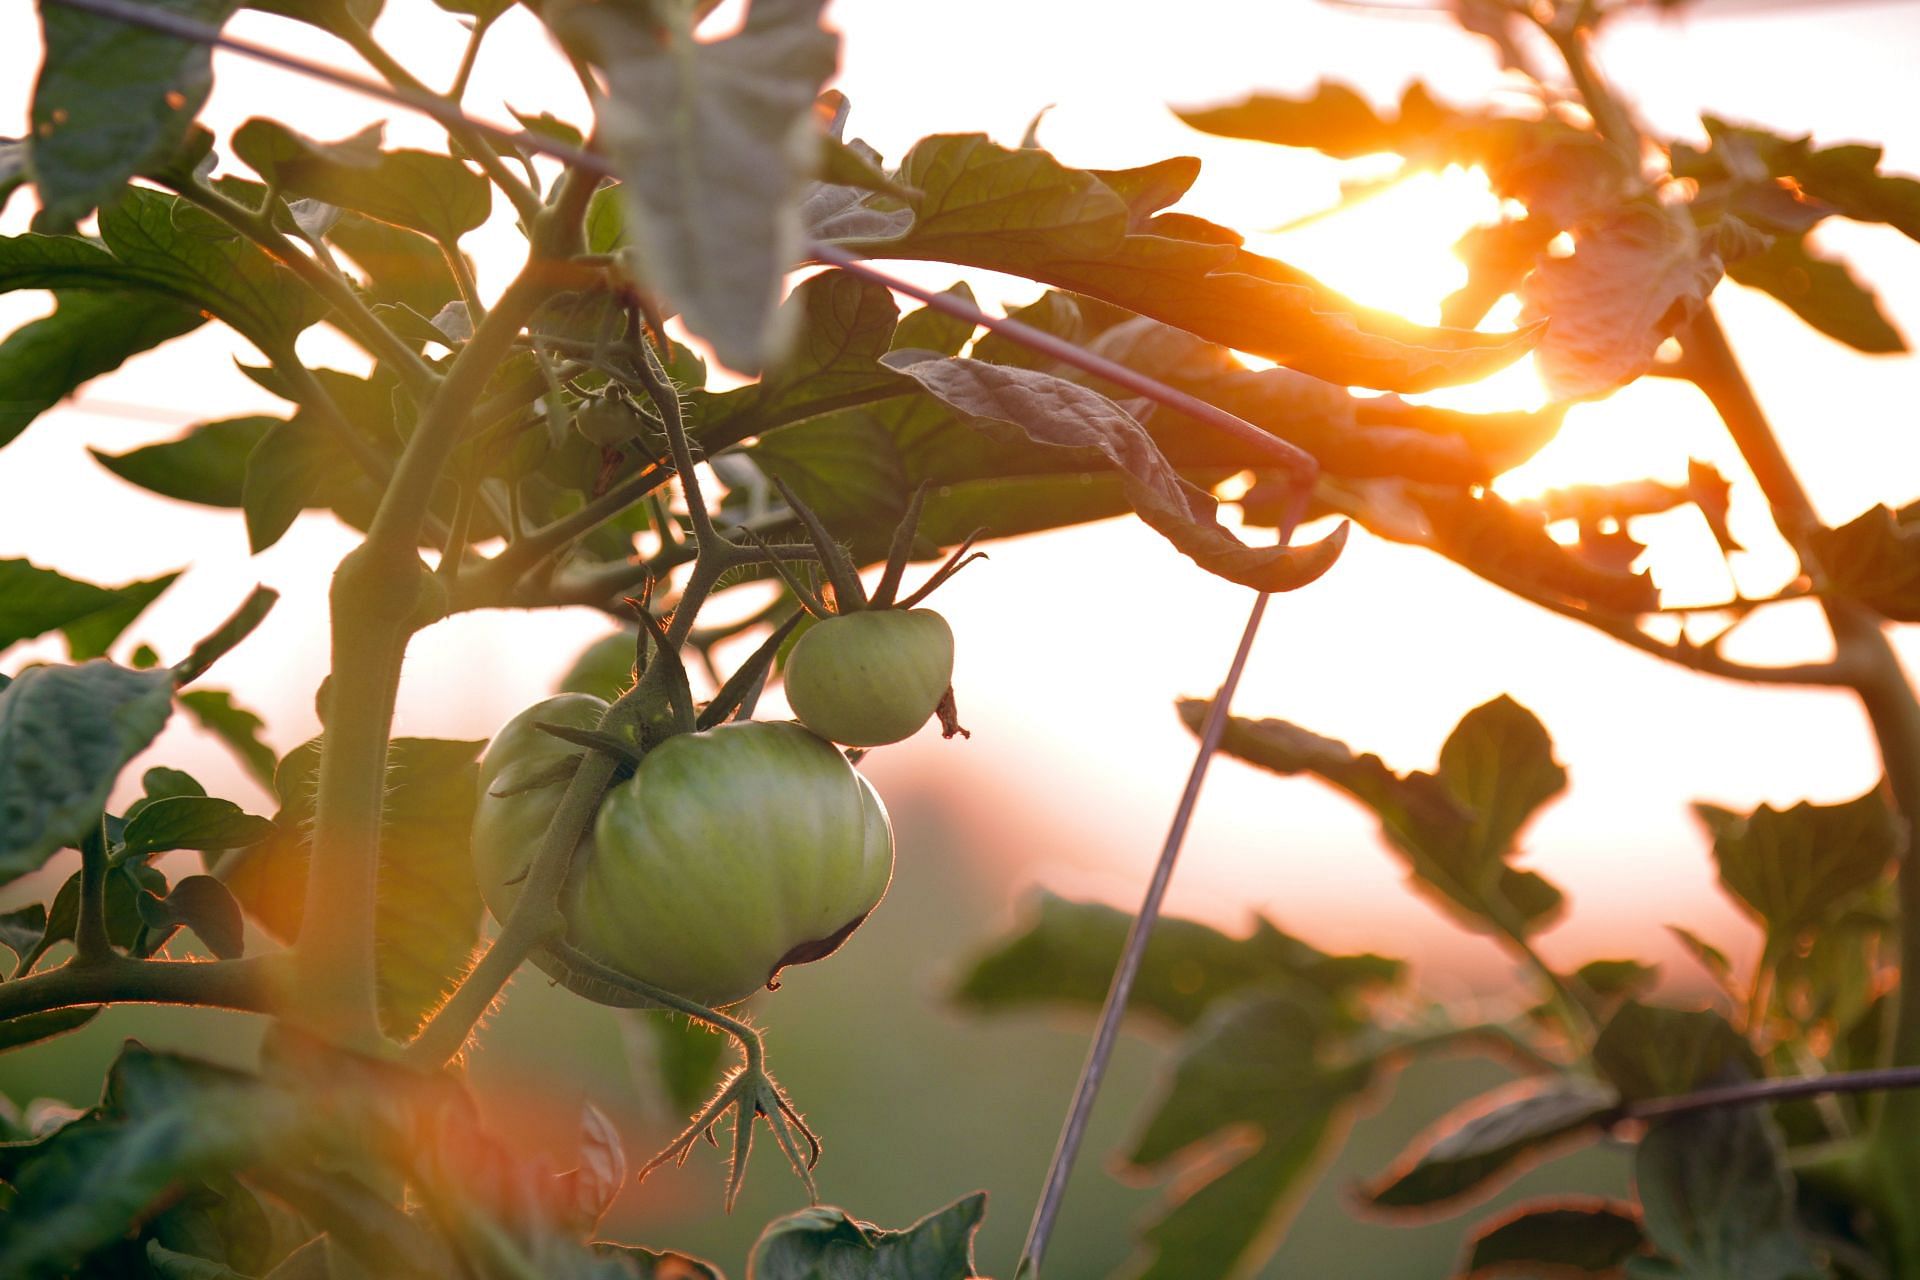 An organic tomato plant(Image by Chad Stembridge/Unsplash)